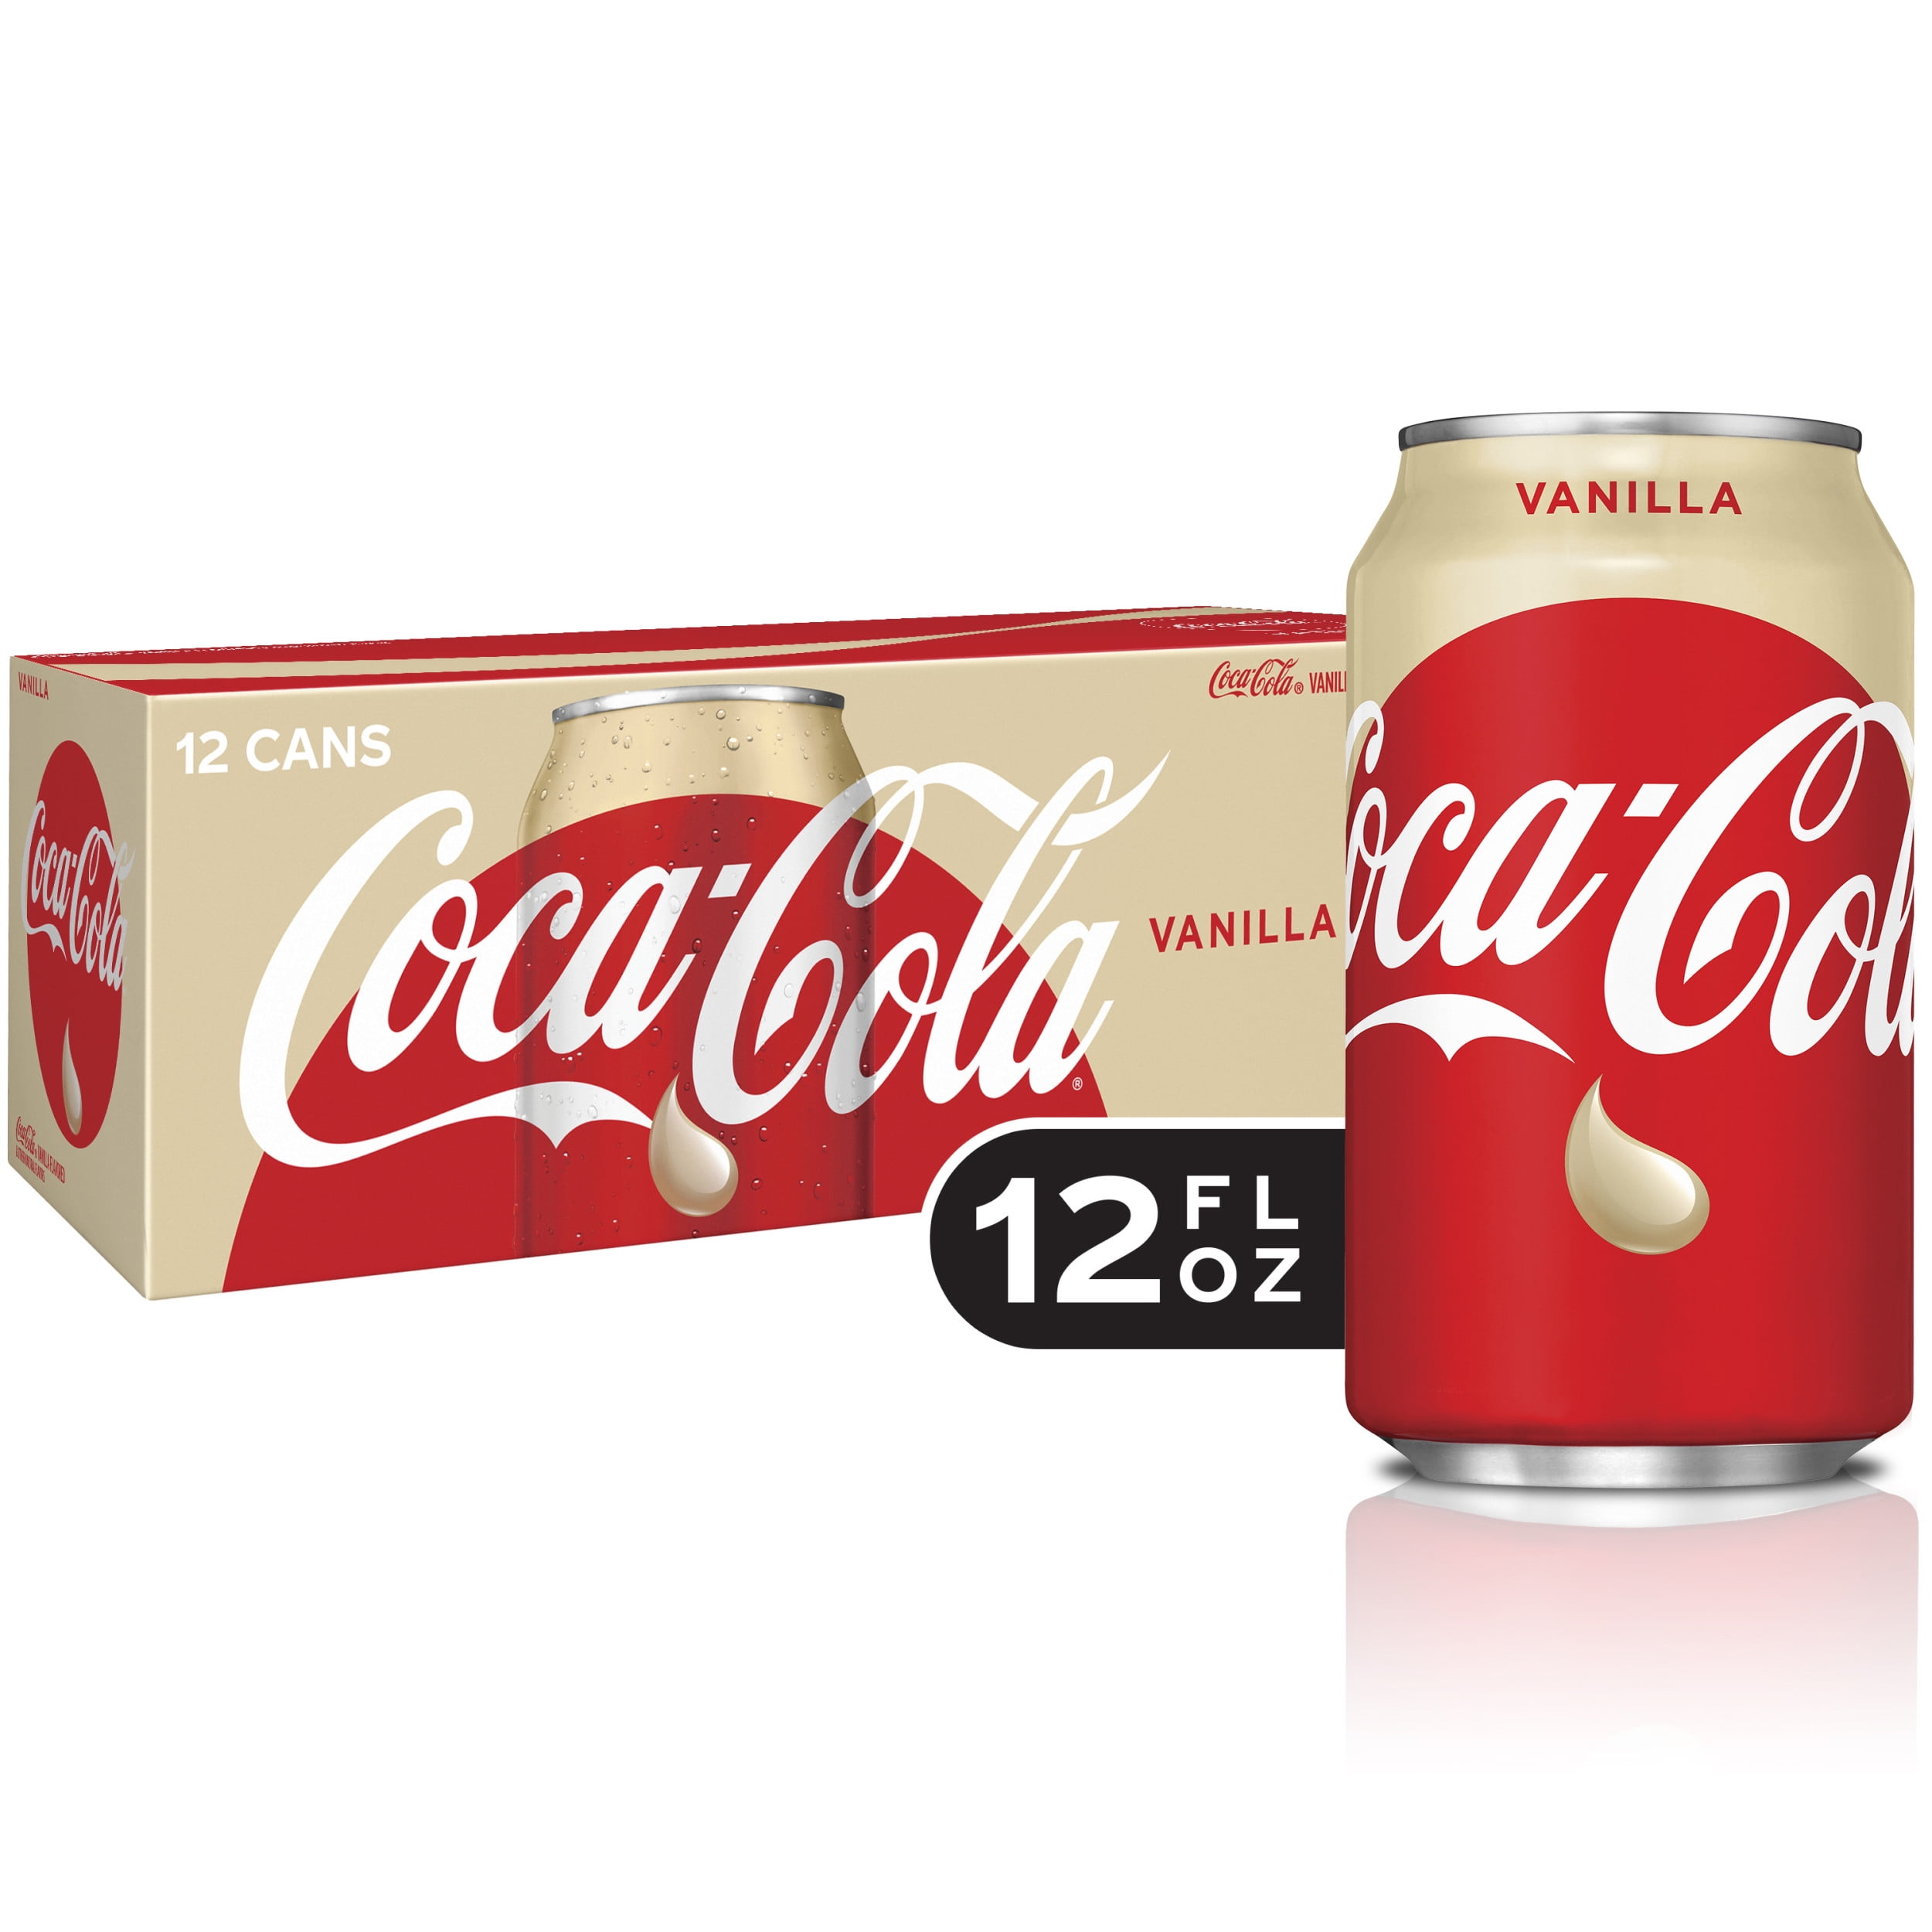 does diet vanilla coke exist to buy